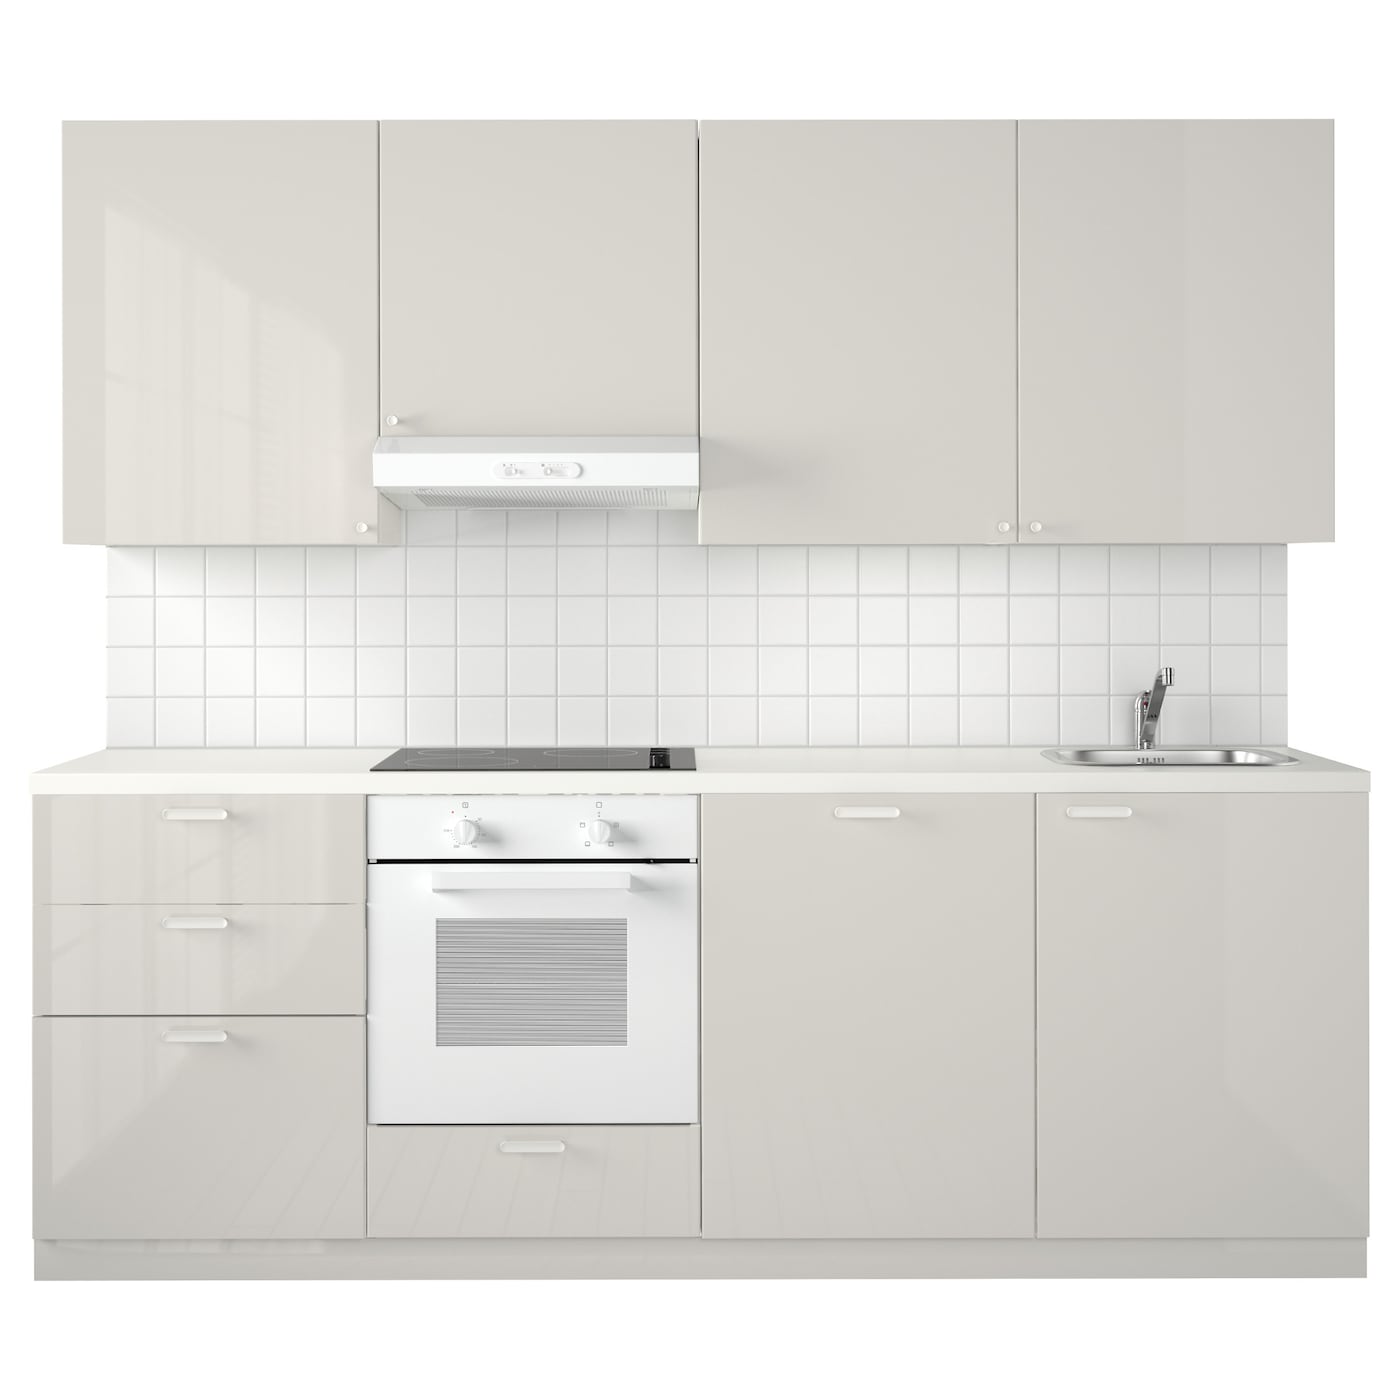 Модульный шкаф - METOD IKEA/ МЕТОД ИКЕА, 228х240 см, светло-серый/белый